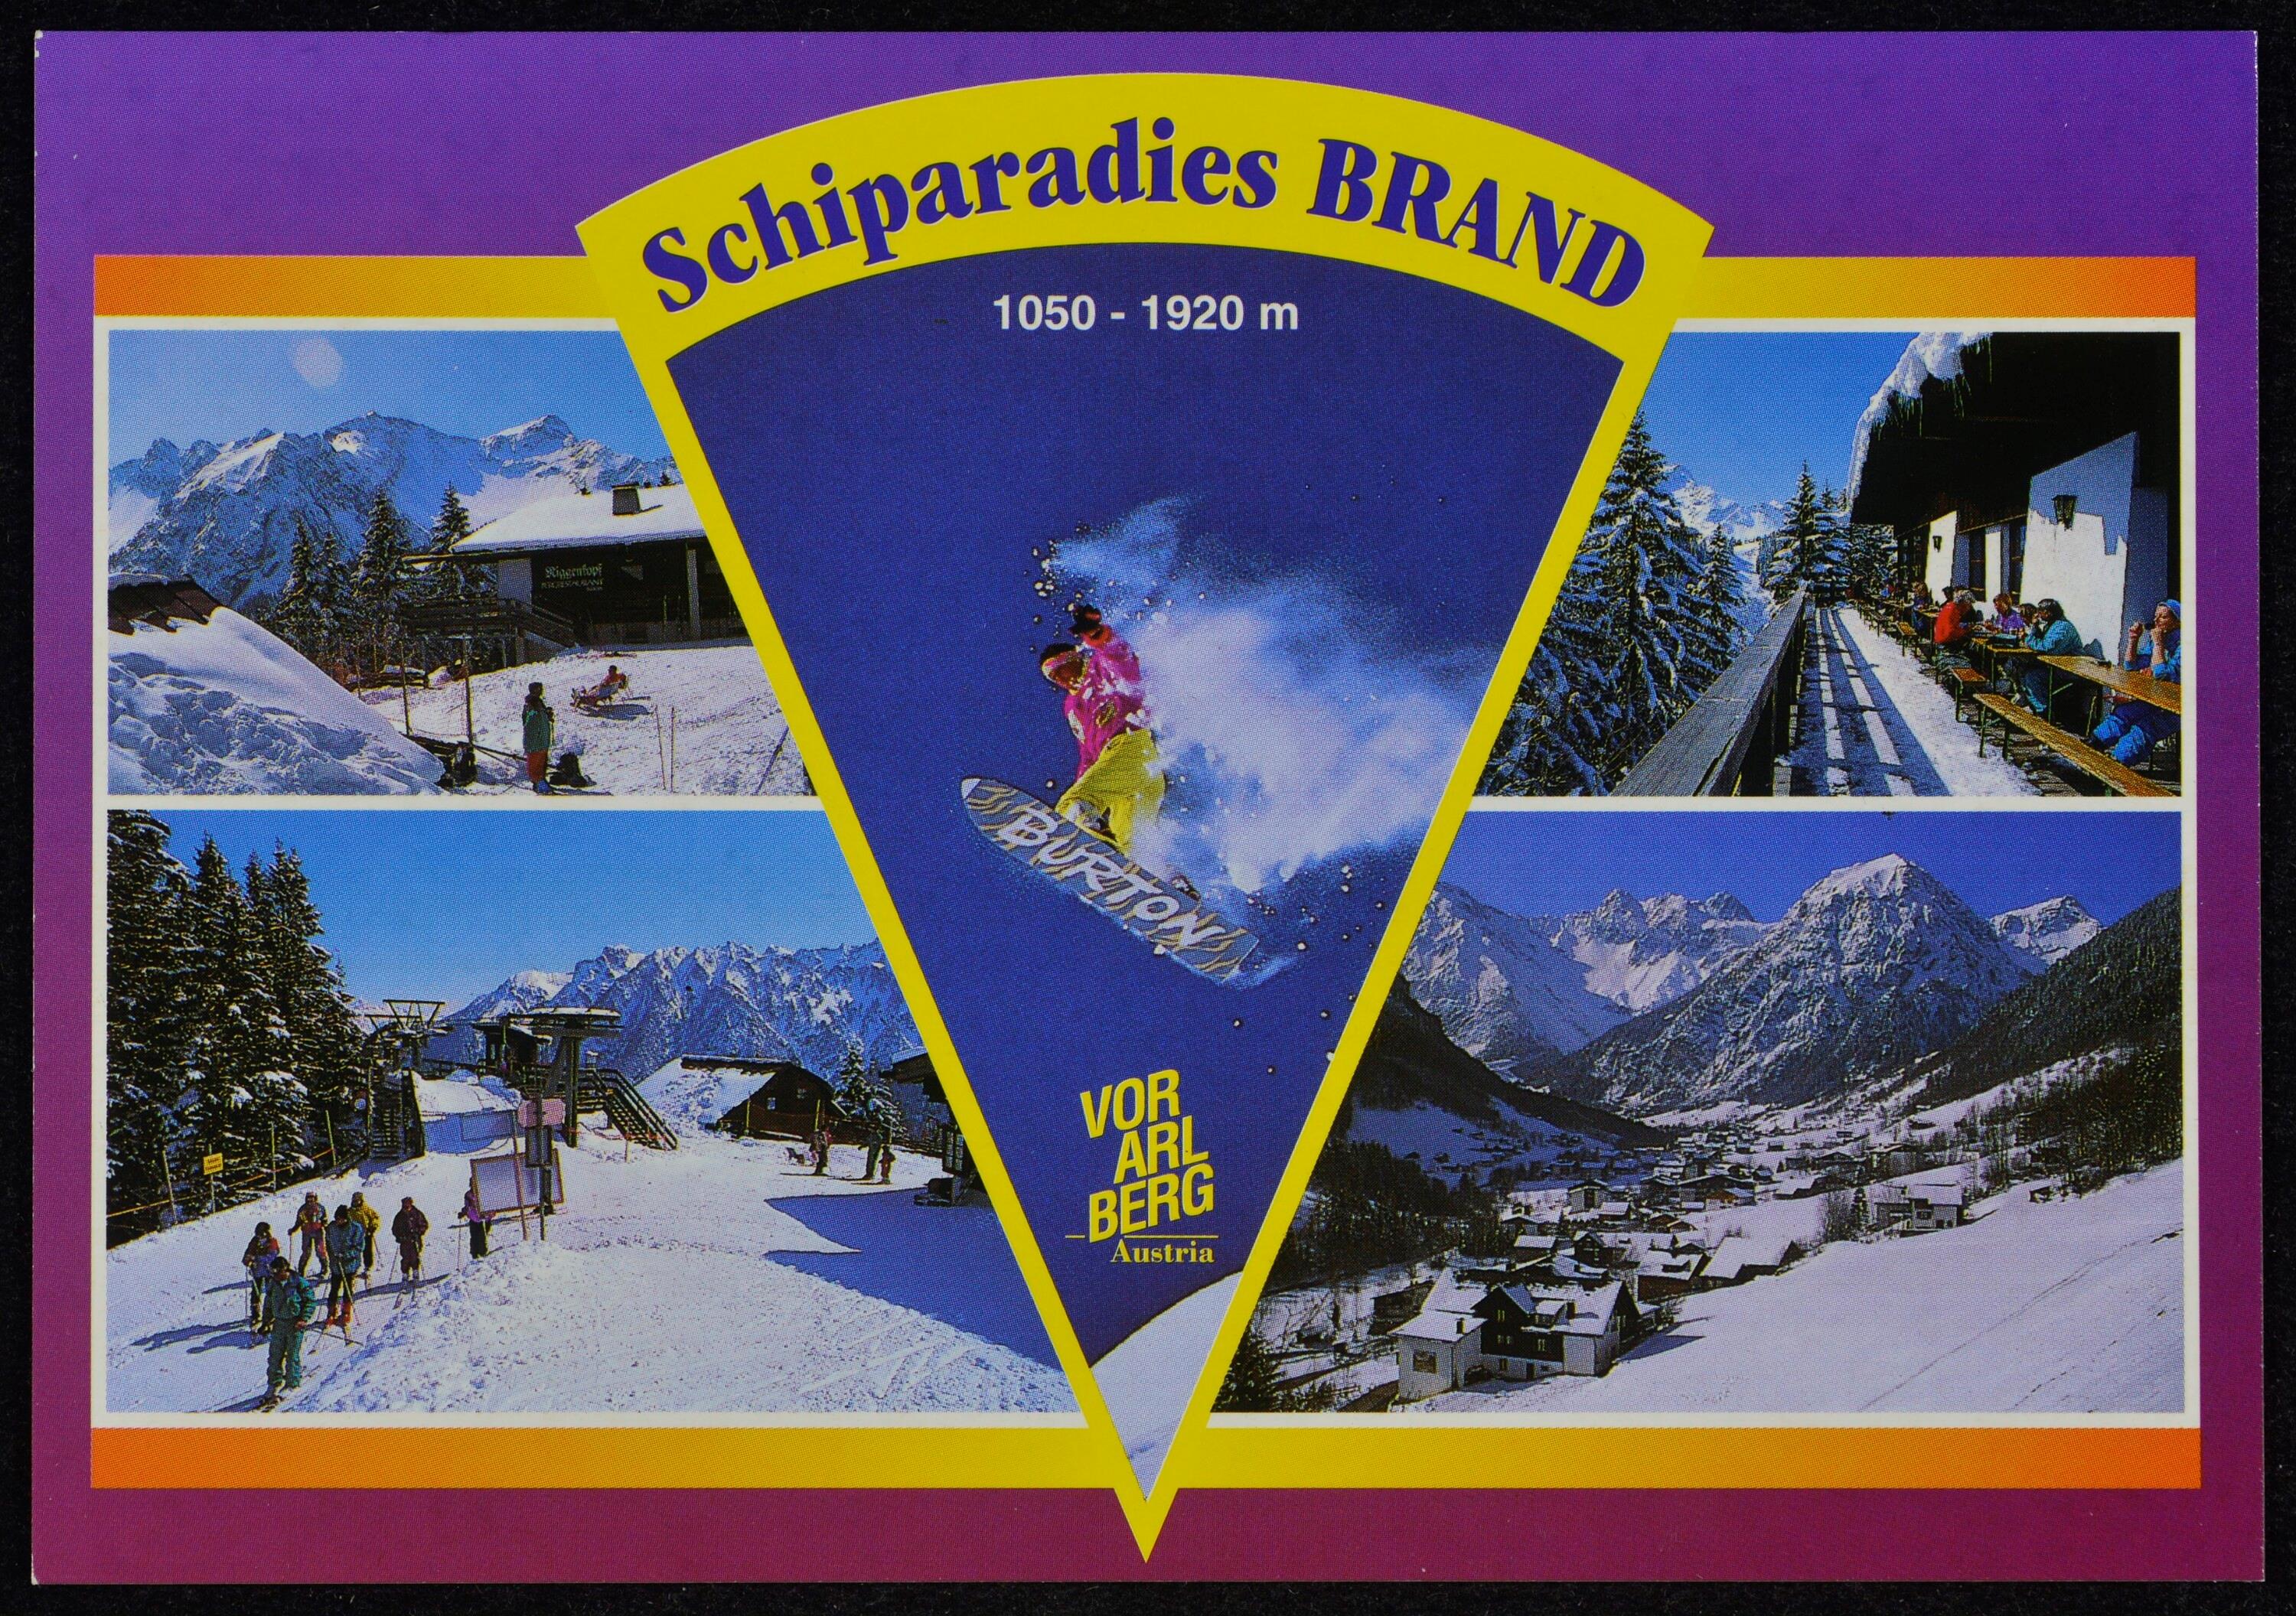 Schiparadies Brand 1050 - 1920 m Vorarlberg Austria></div>


    <hr>
    <div class=